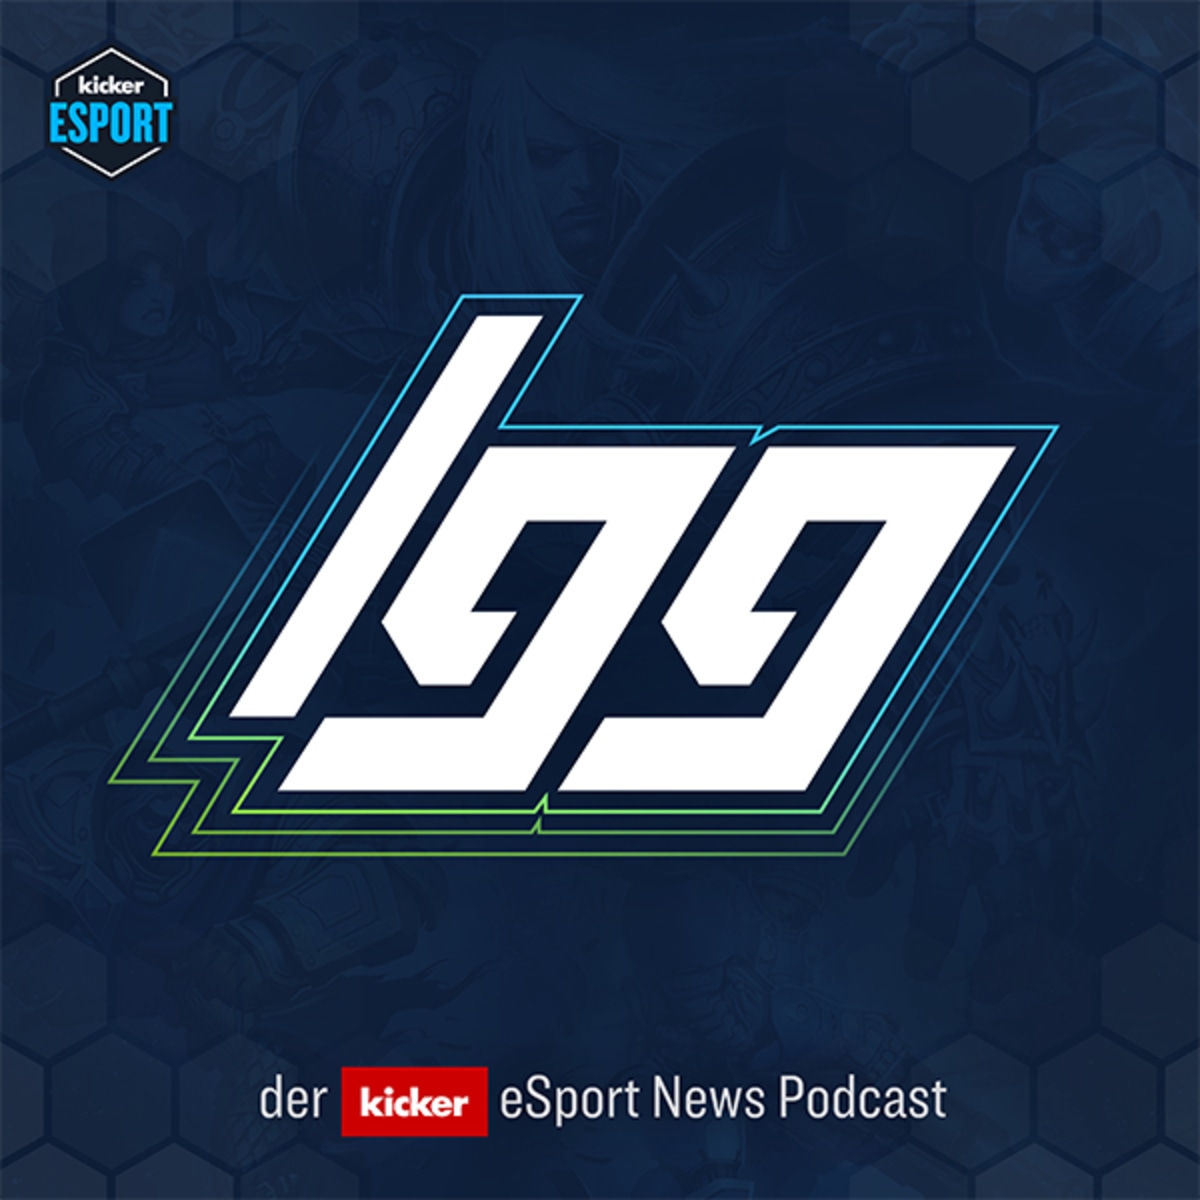 gg - kicker eSport News Podcast